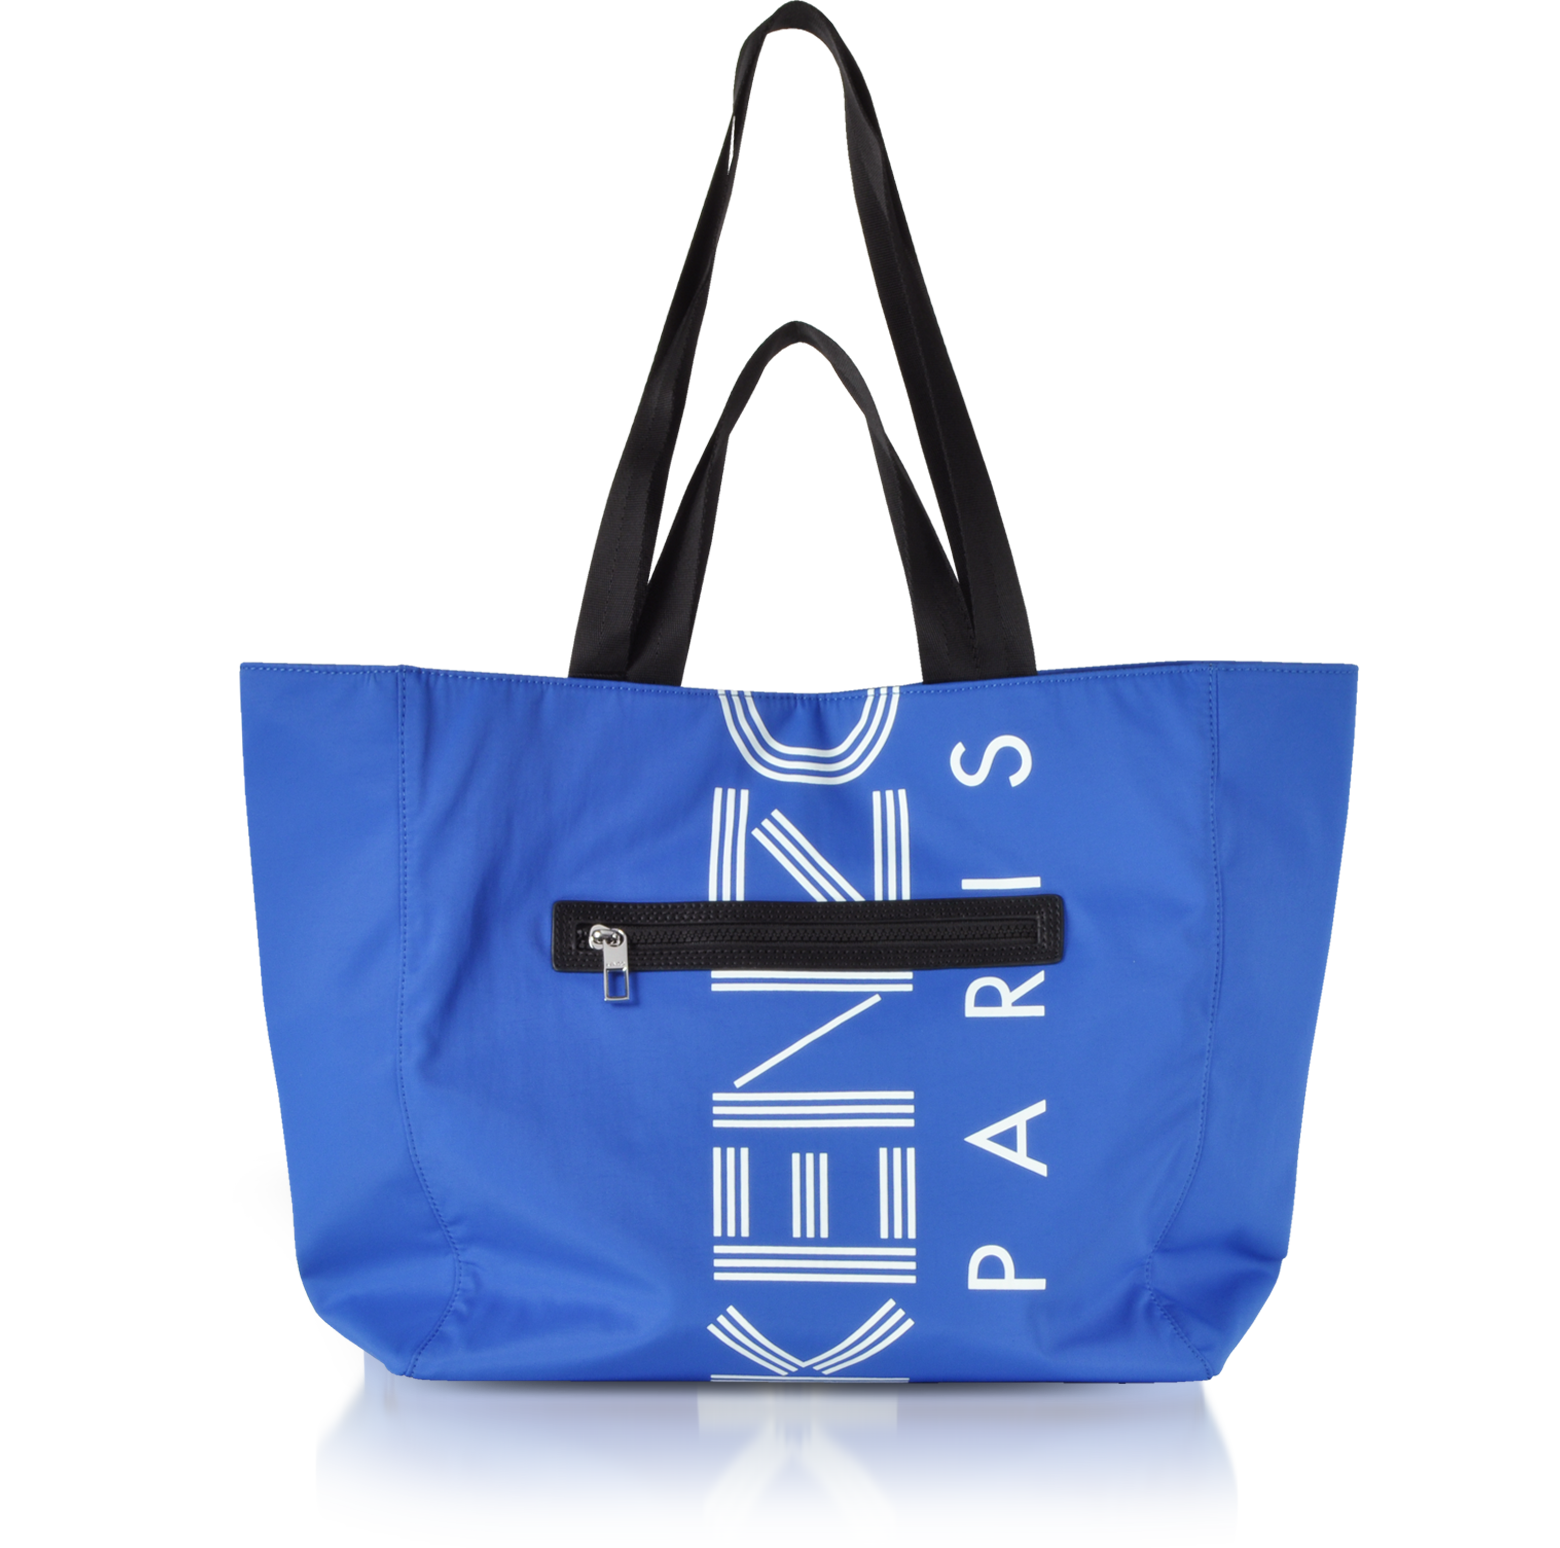 kenzo blue bag